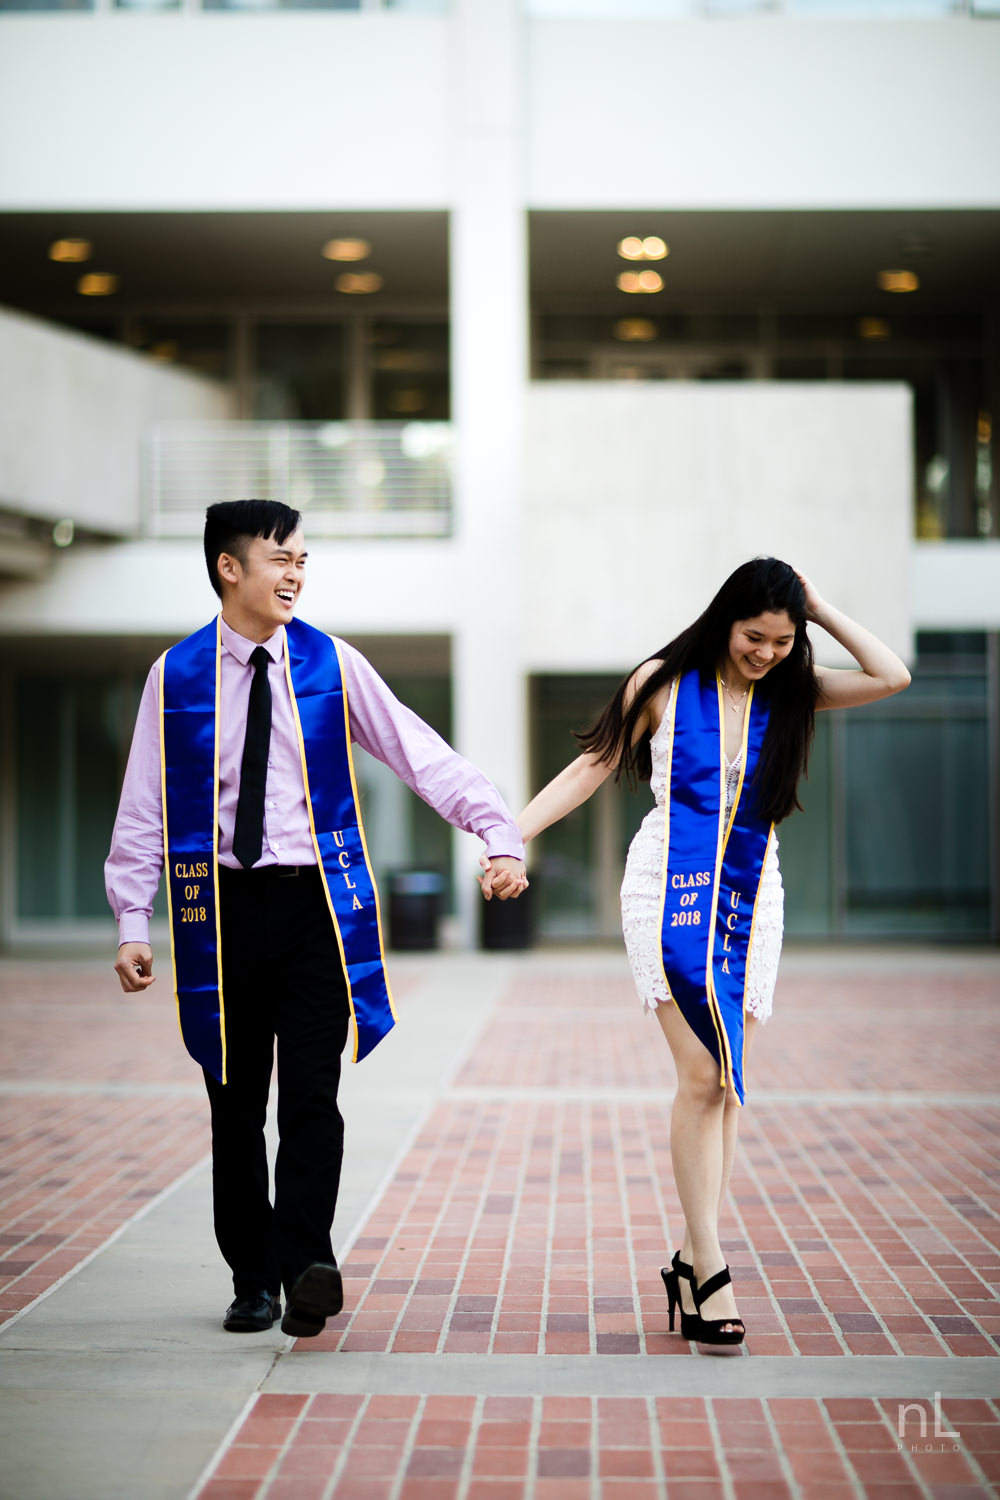 los-angeles-ucla-senior-graduation-portraits-couple-with-sashes-walking-holding-hands